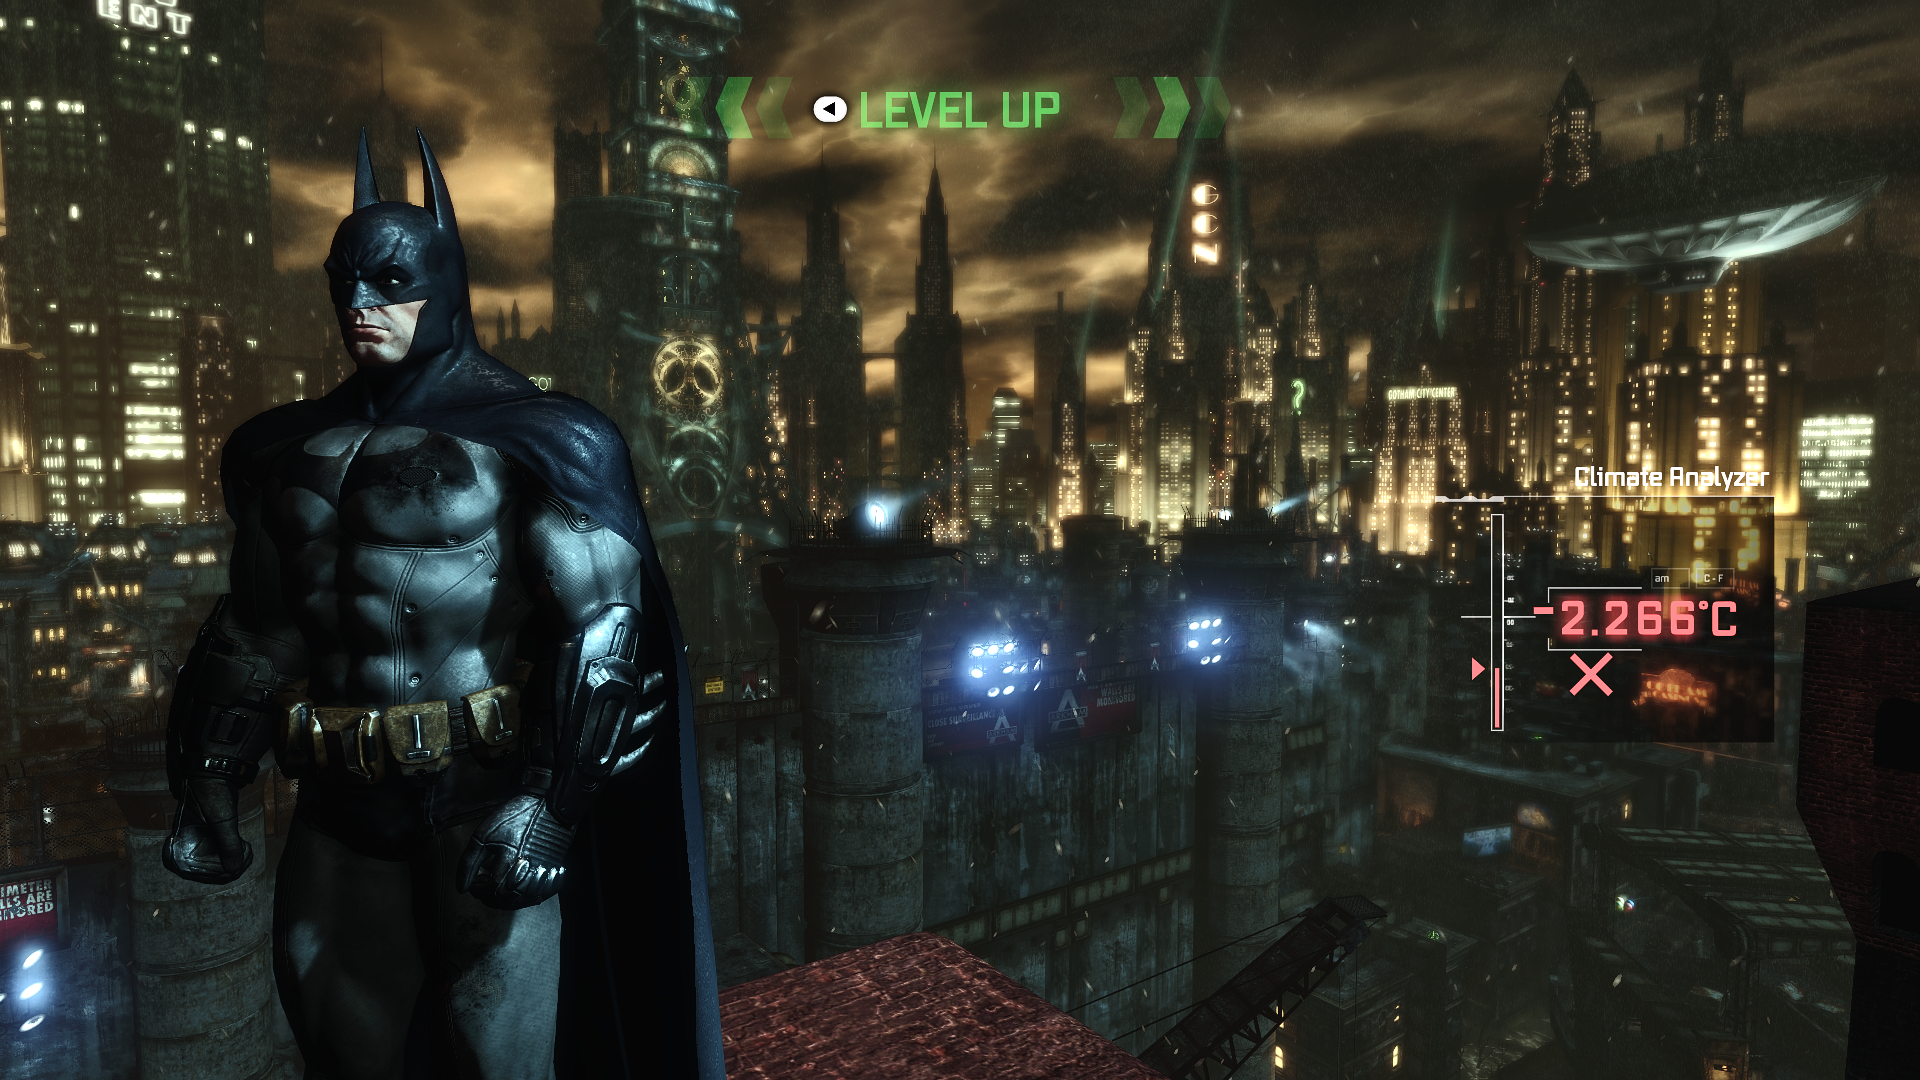 Бэтмен 1 9 9 2. Игра Бэтмен Аркхем Сити Робин. 1.1.1 Batman: Arkham City. Аркхем Сити директ 11. Batman Arkham City SWEETFX.